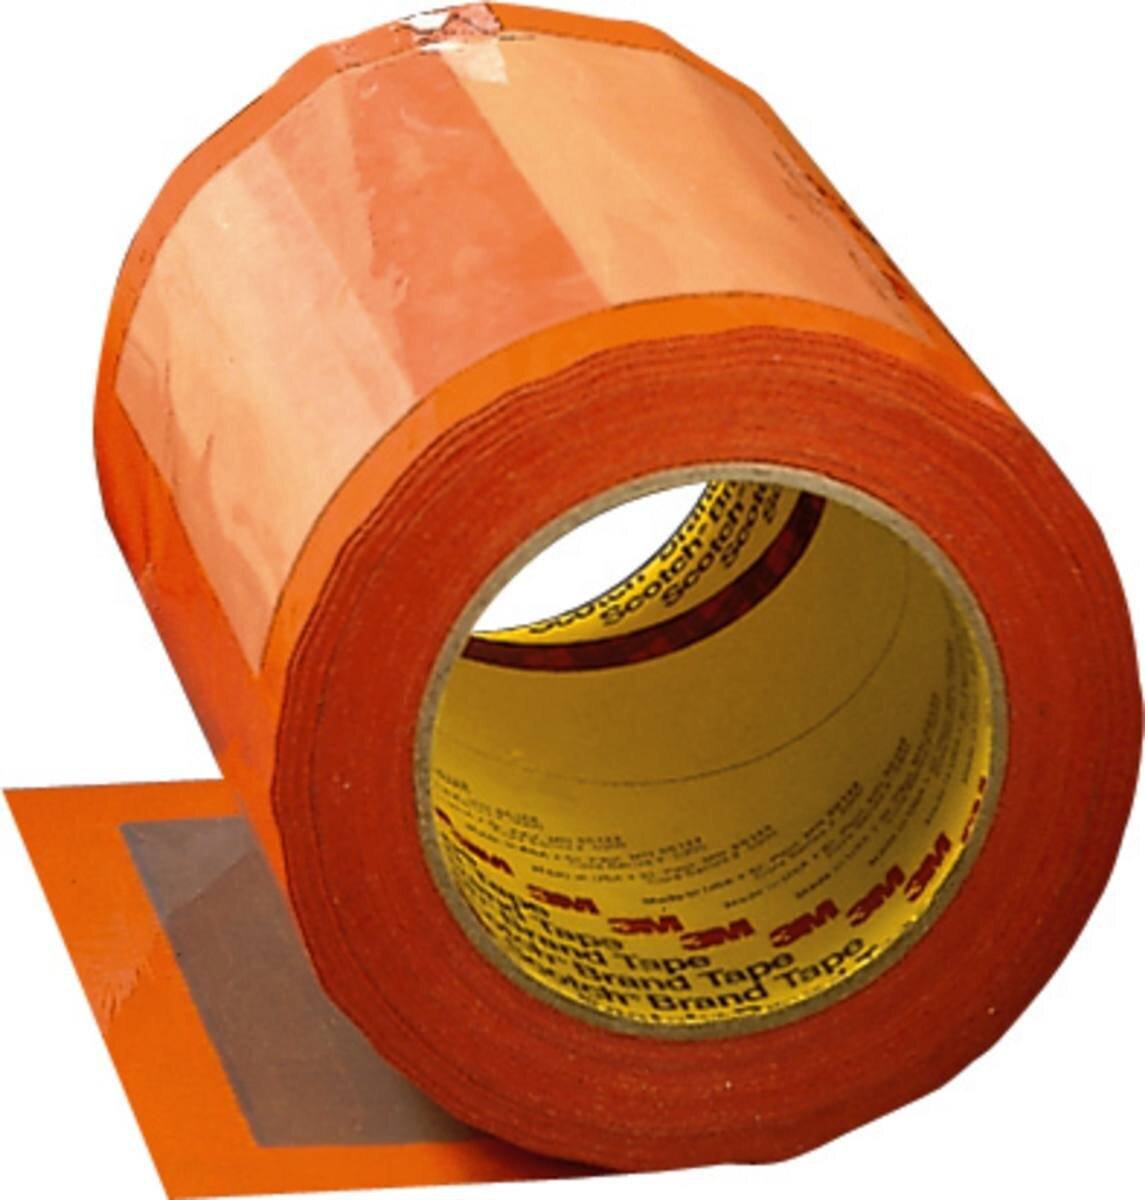 3M Scotch Pouch Tape protección de documentos 8242 transparente, transparente, 150 mm x 66 m, 0,053 mm